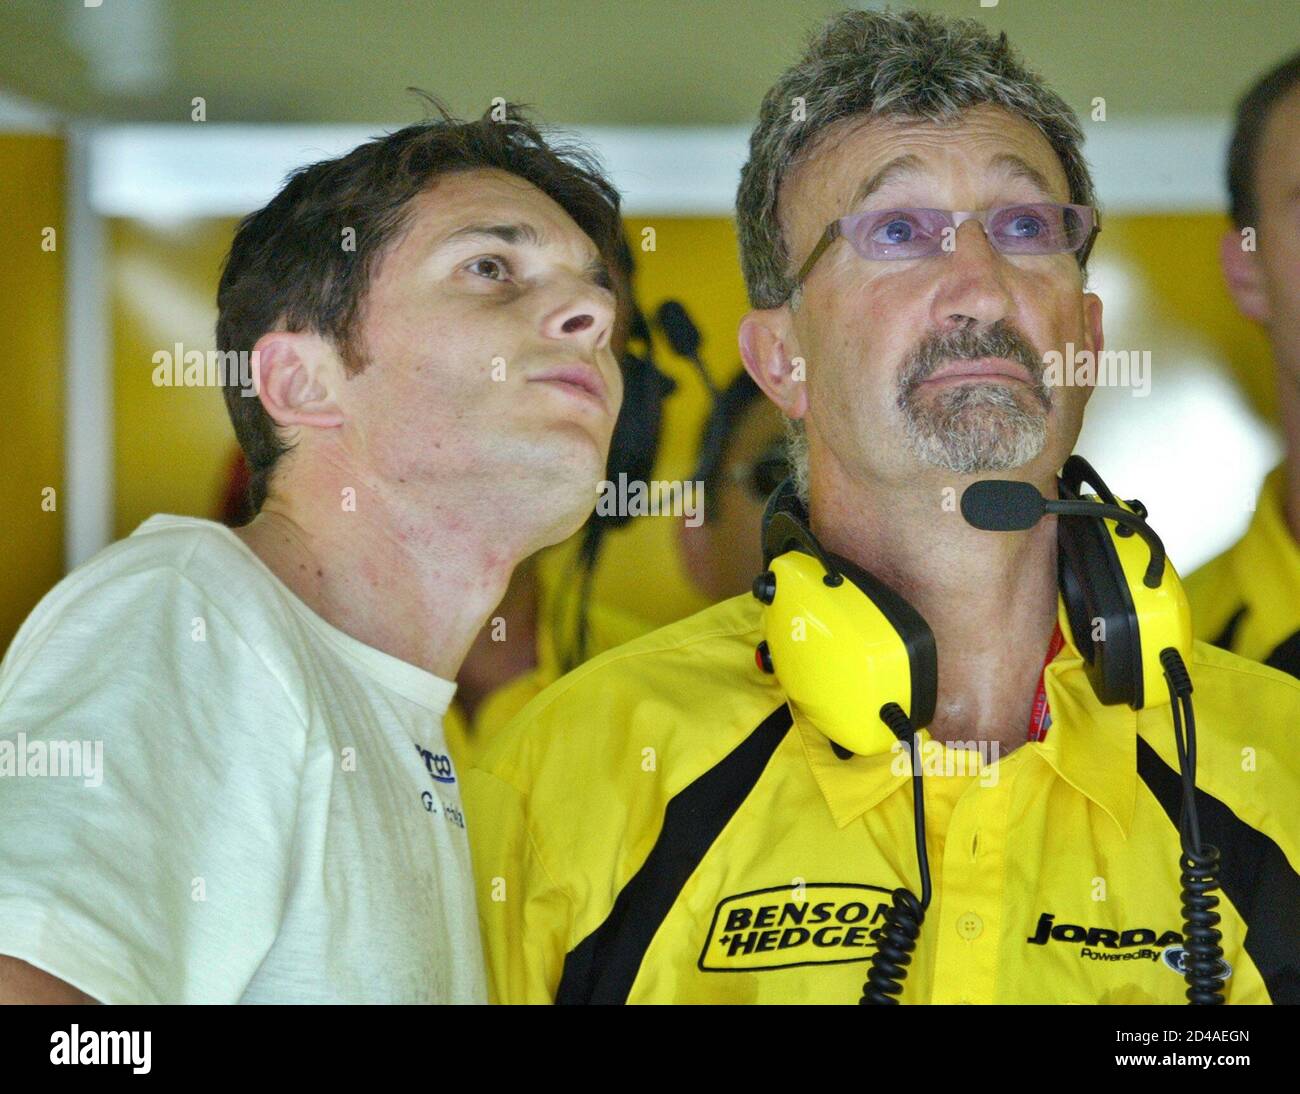 F1 DRIVER FISICHELLA AND HIS TEAM'S CHIEF EXECUTIVE EDDIE JORDAN WATCH MONITOR AT MALAYSIA'S SEPANG Stock Photo -